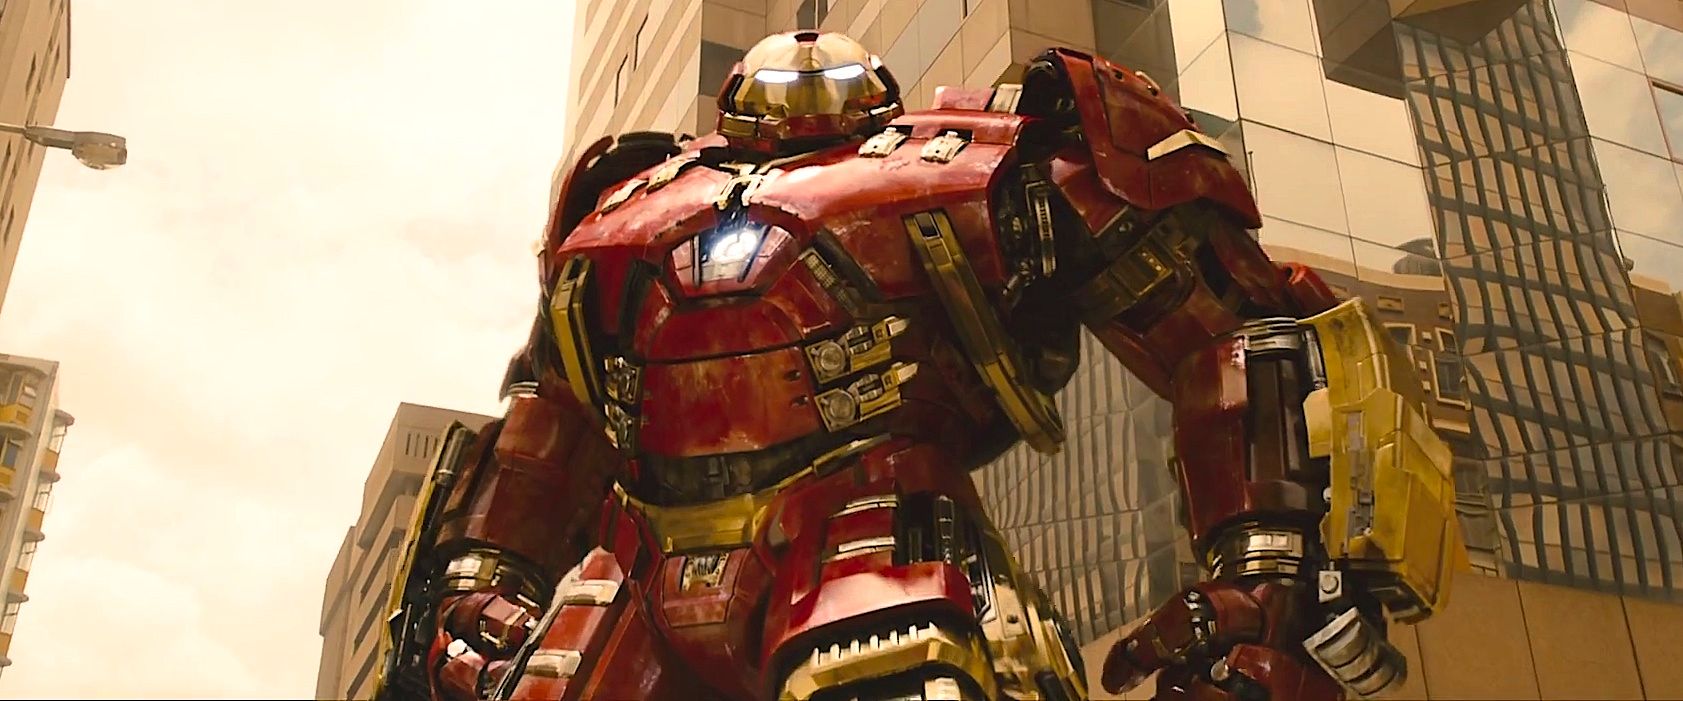 Our 10 Favorite MCU Iron Man Armors Ranked